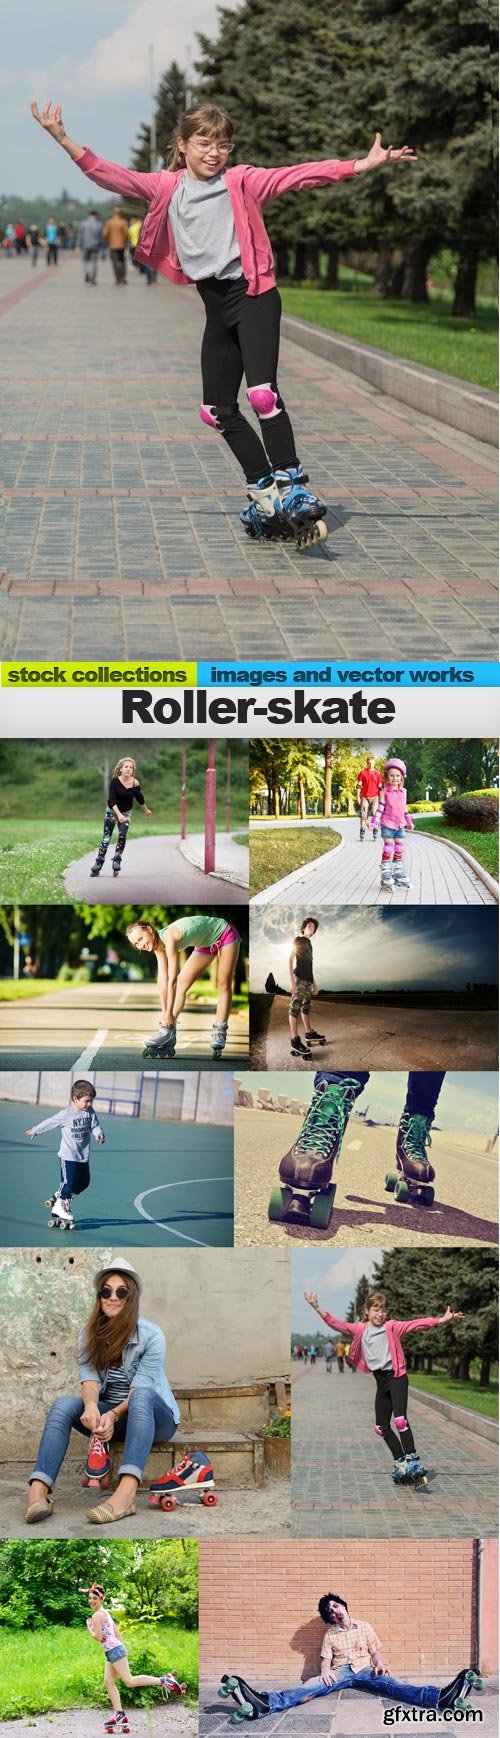 Roller-skate, 10 x UHQ JPEG